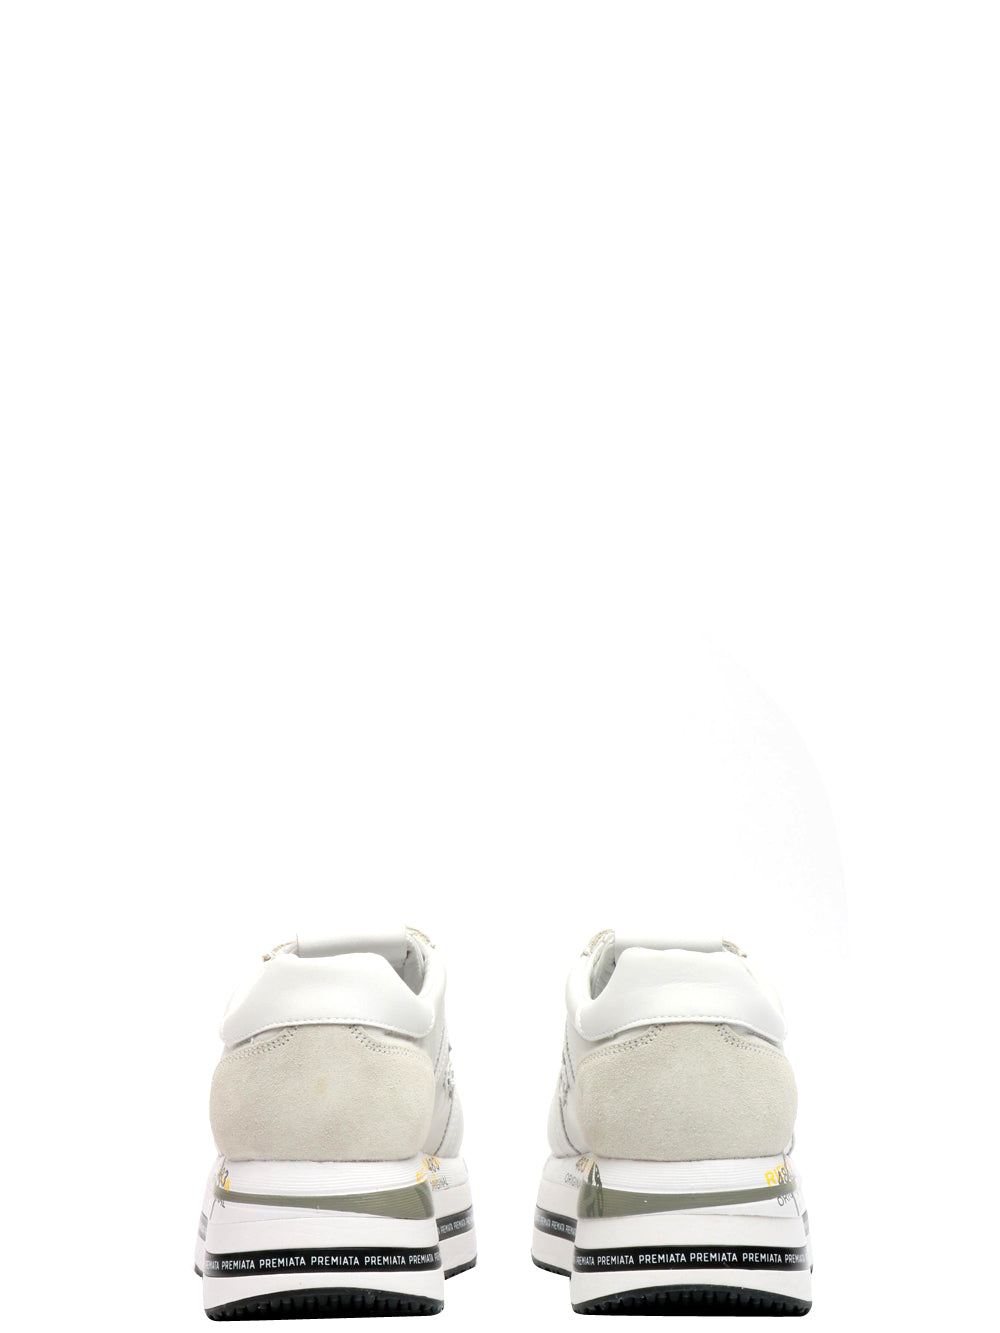 PREMIATA Scarpe Sneakers Beth in Pelle Bianche Bianco sporco